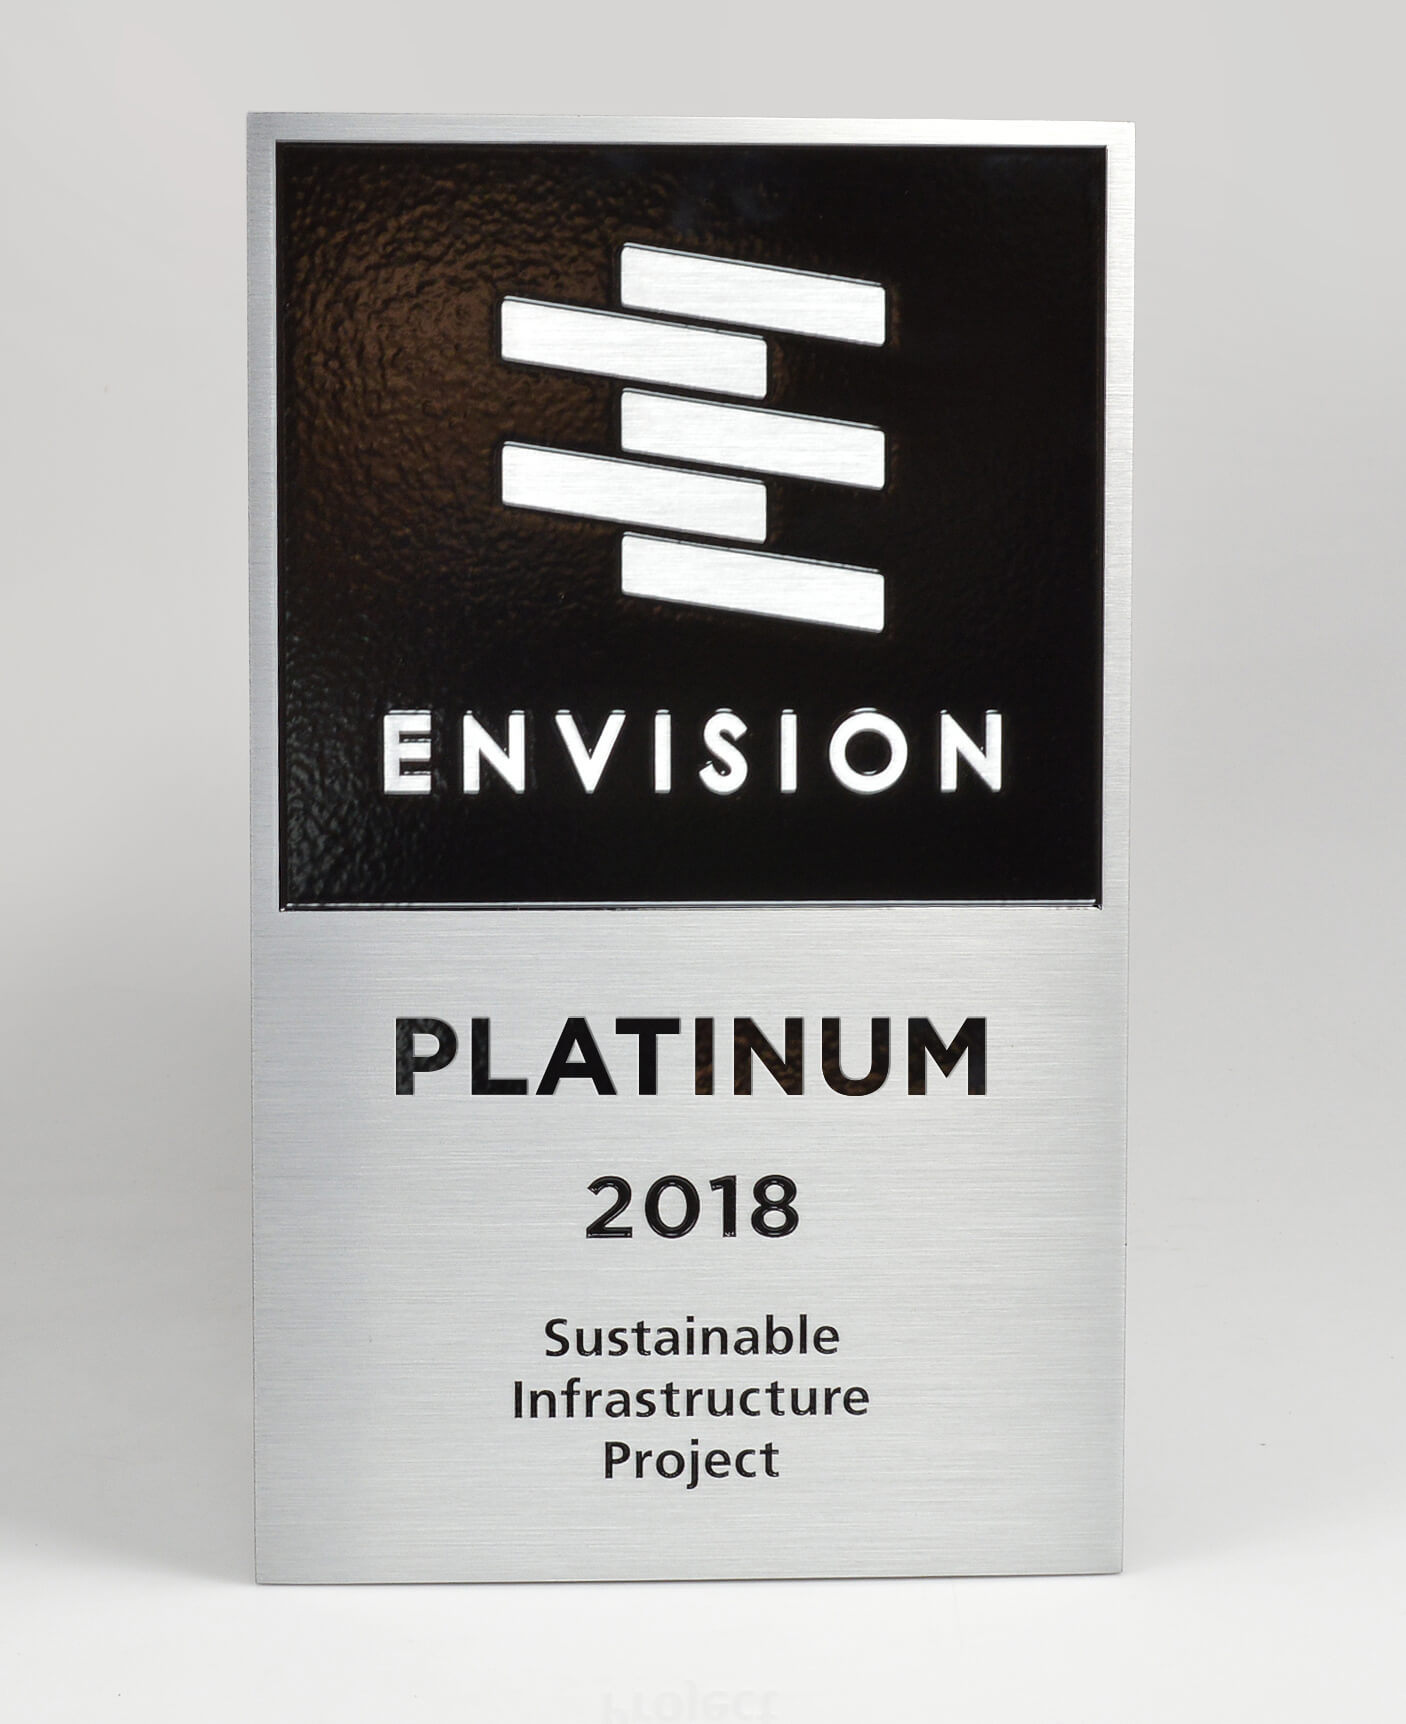 custom-award_modern_certification-program_cast-aluminum-wall-plaque_corporate_recognition